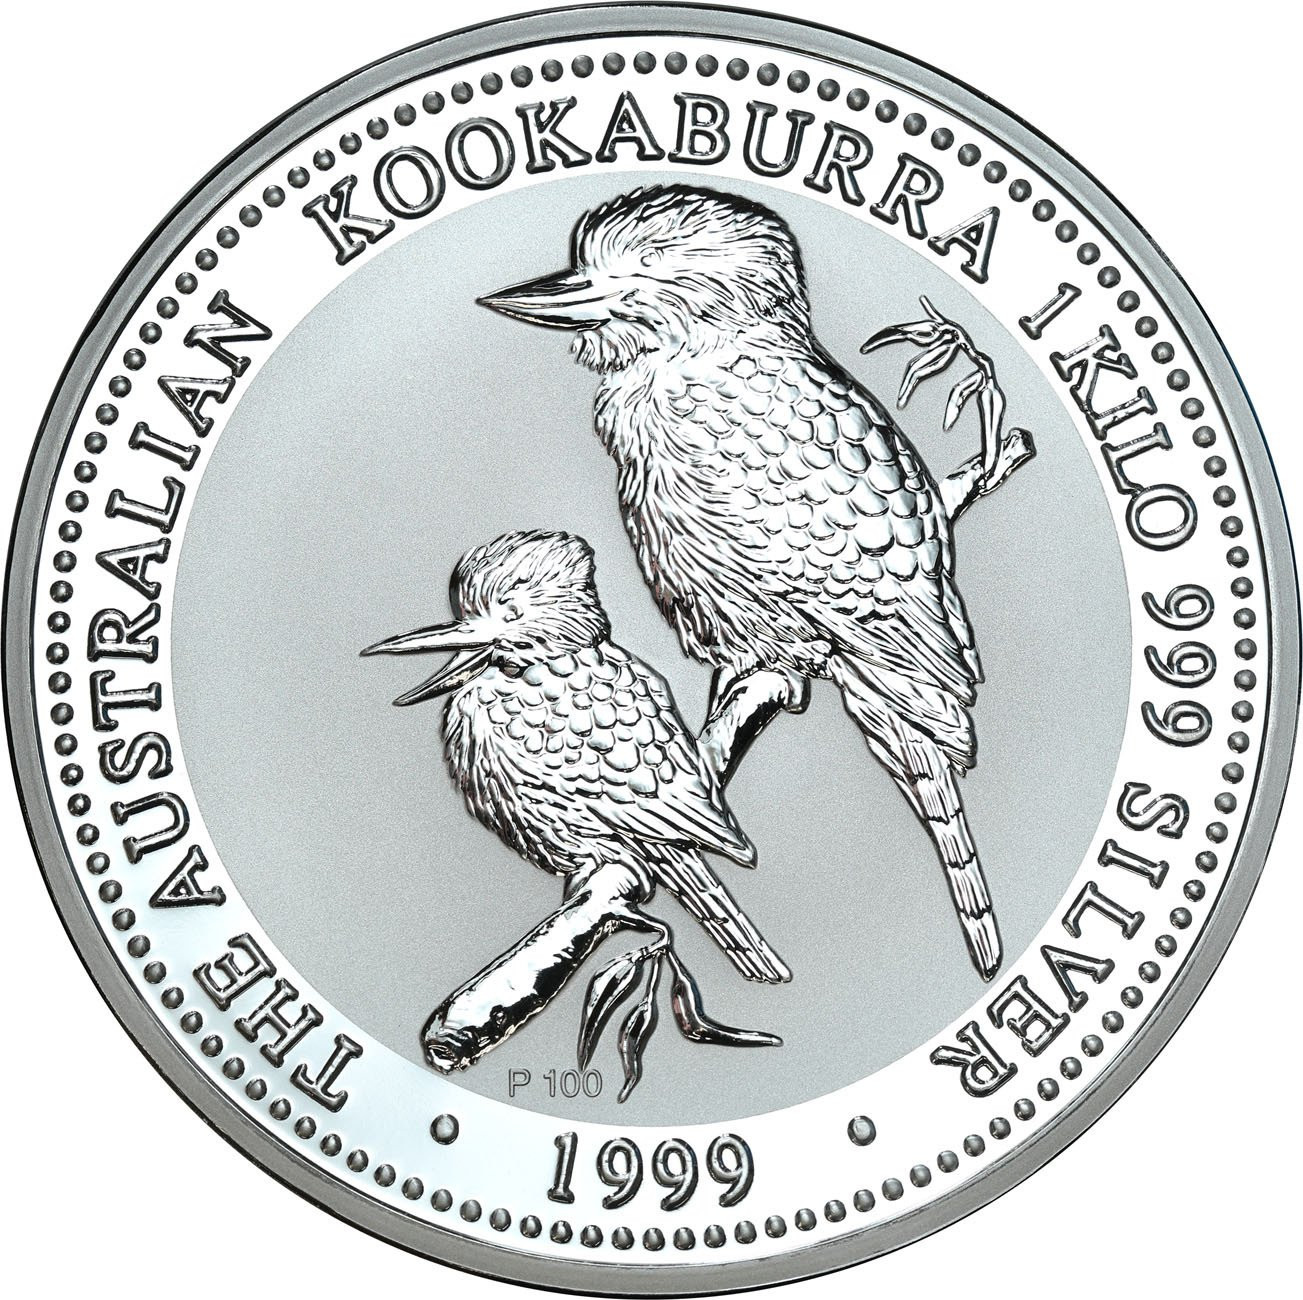 Australia 30 dolarów 1999 - 1 kg Ag .999 kookaburra 